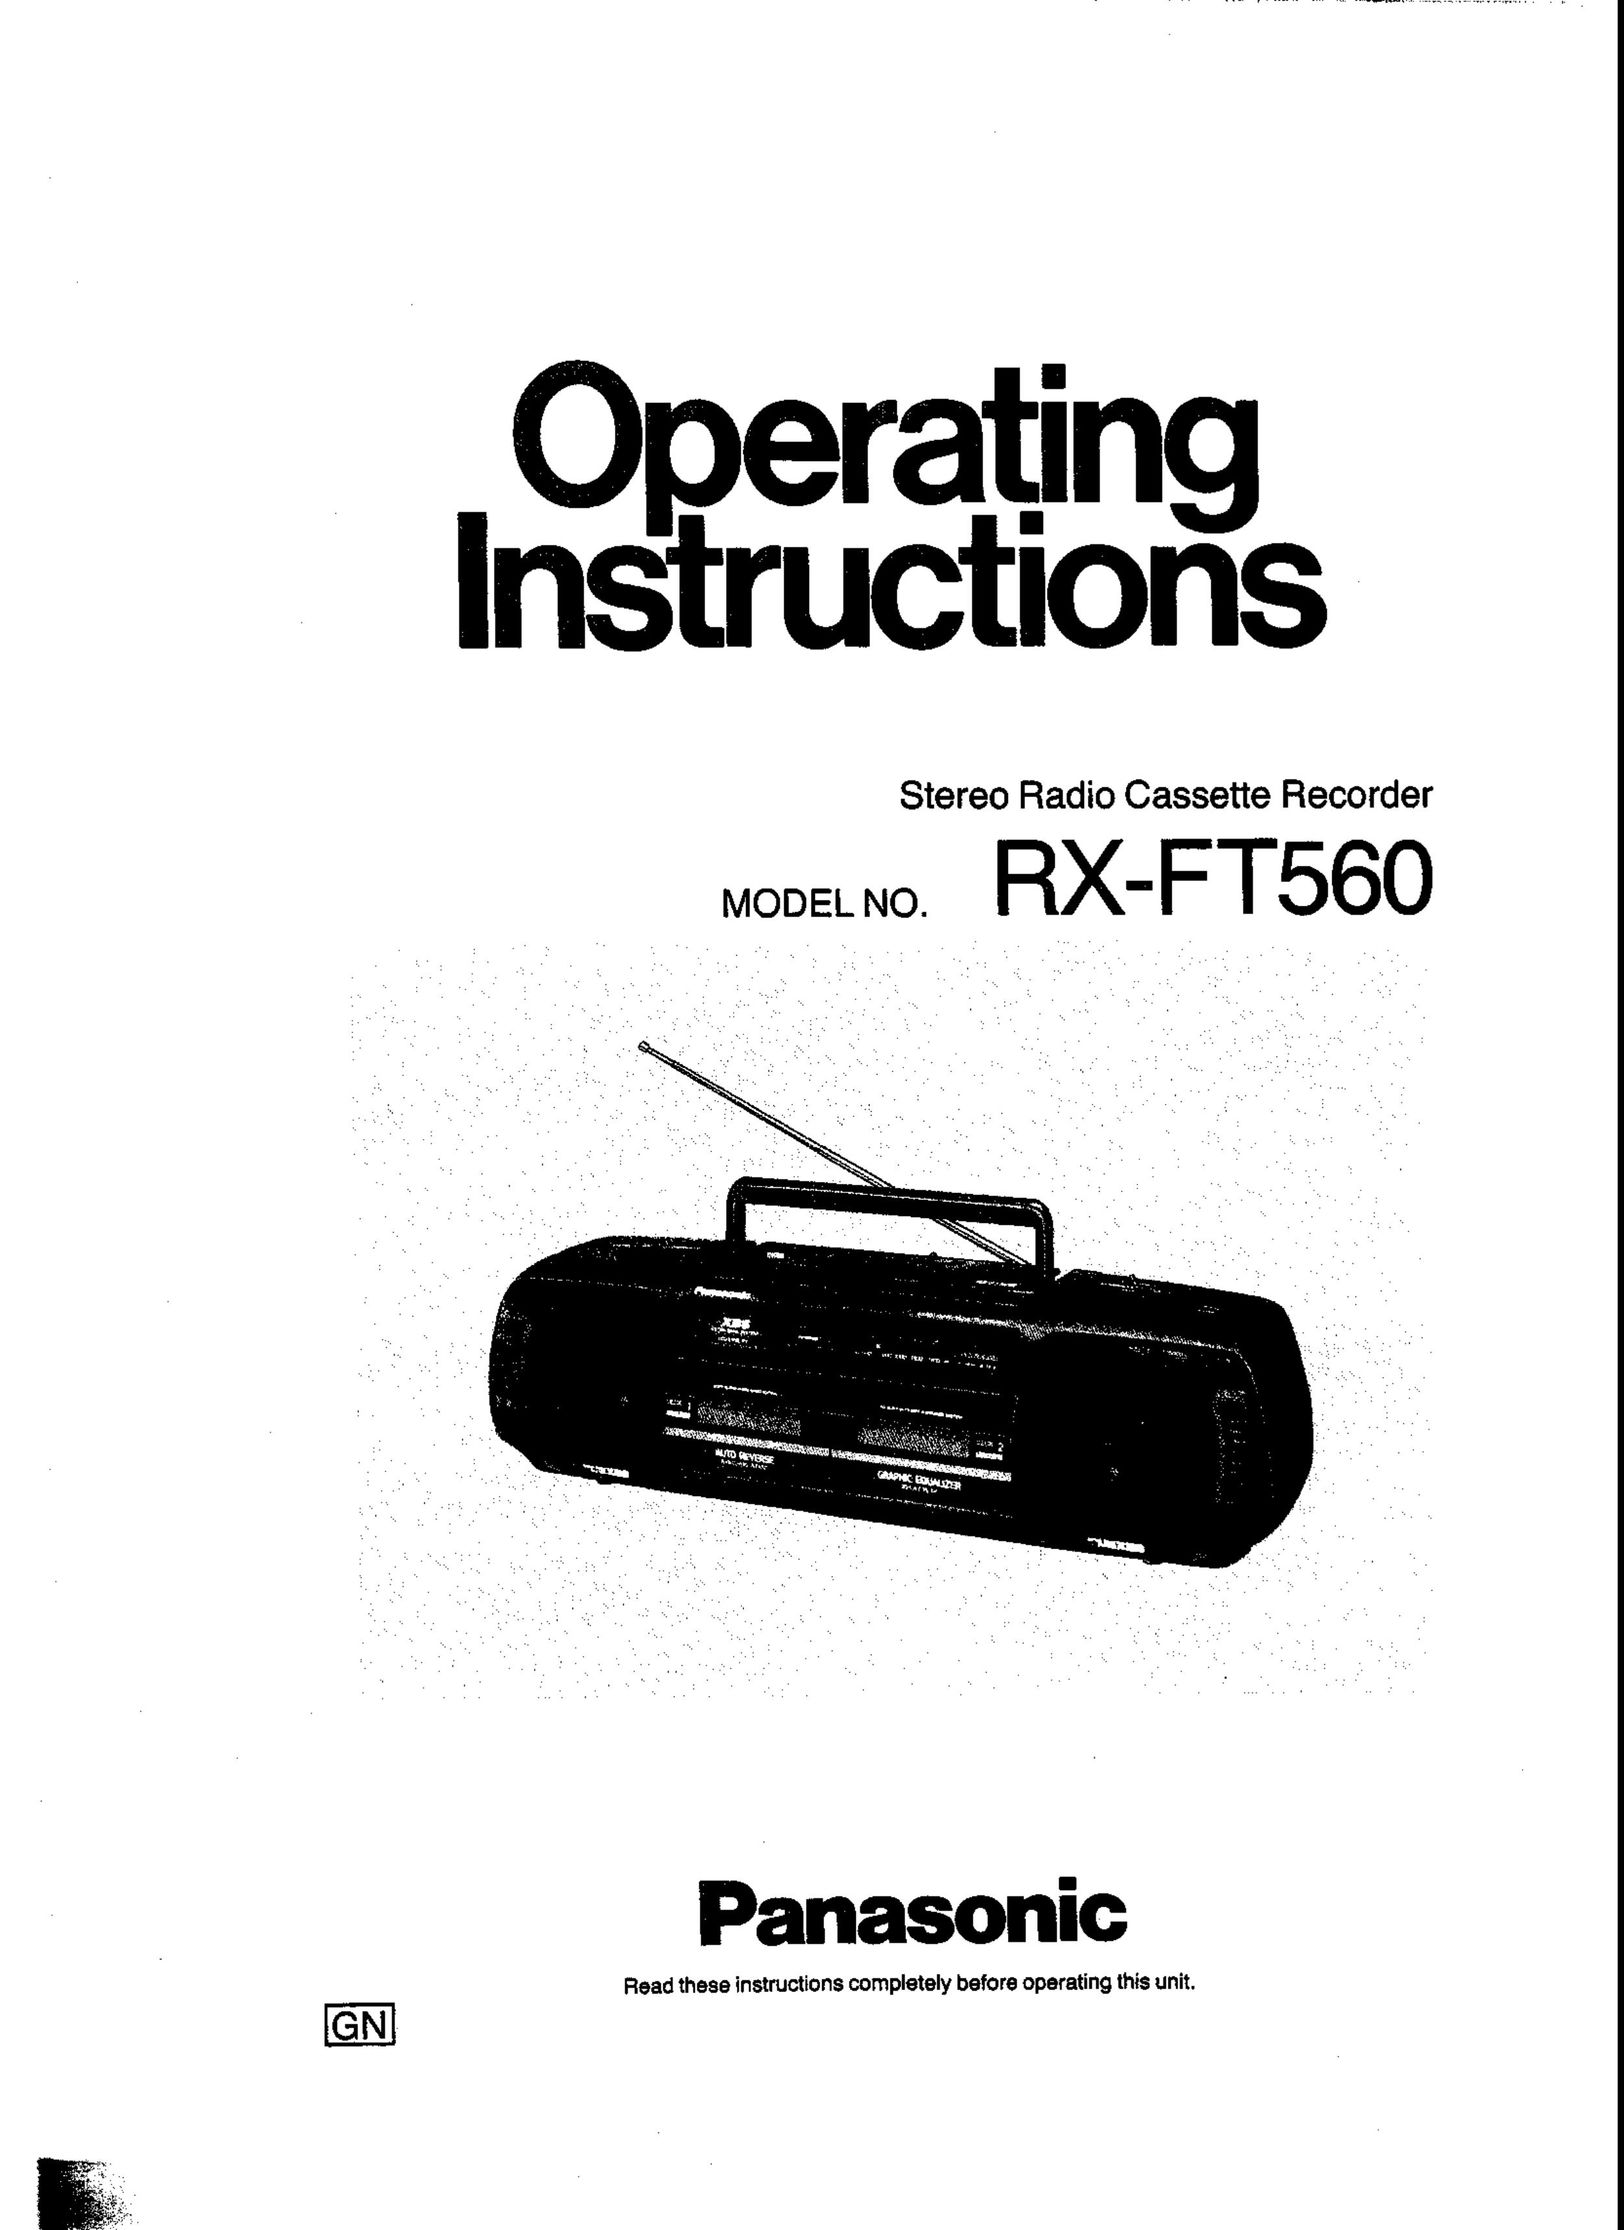 Panasonic RX-FT560 Microcassette Recorder User Manual